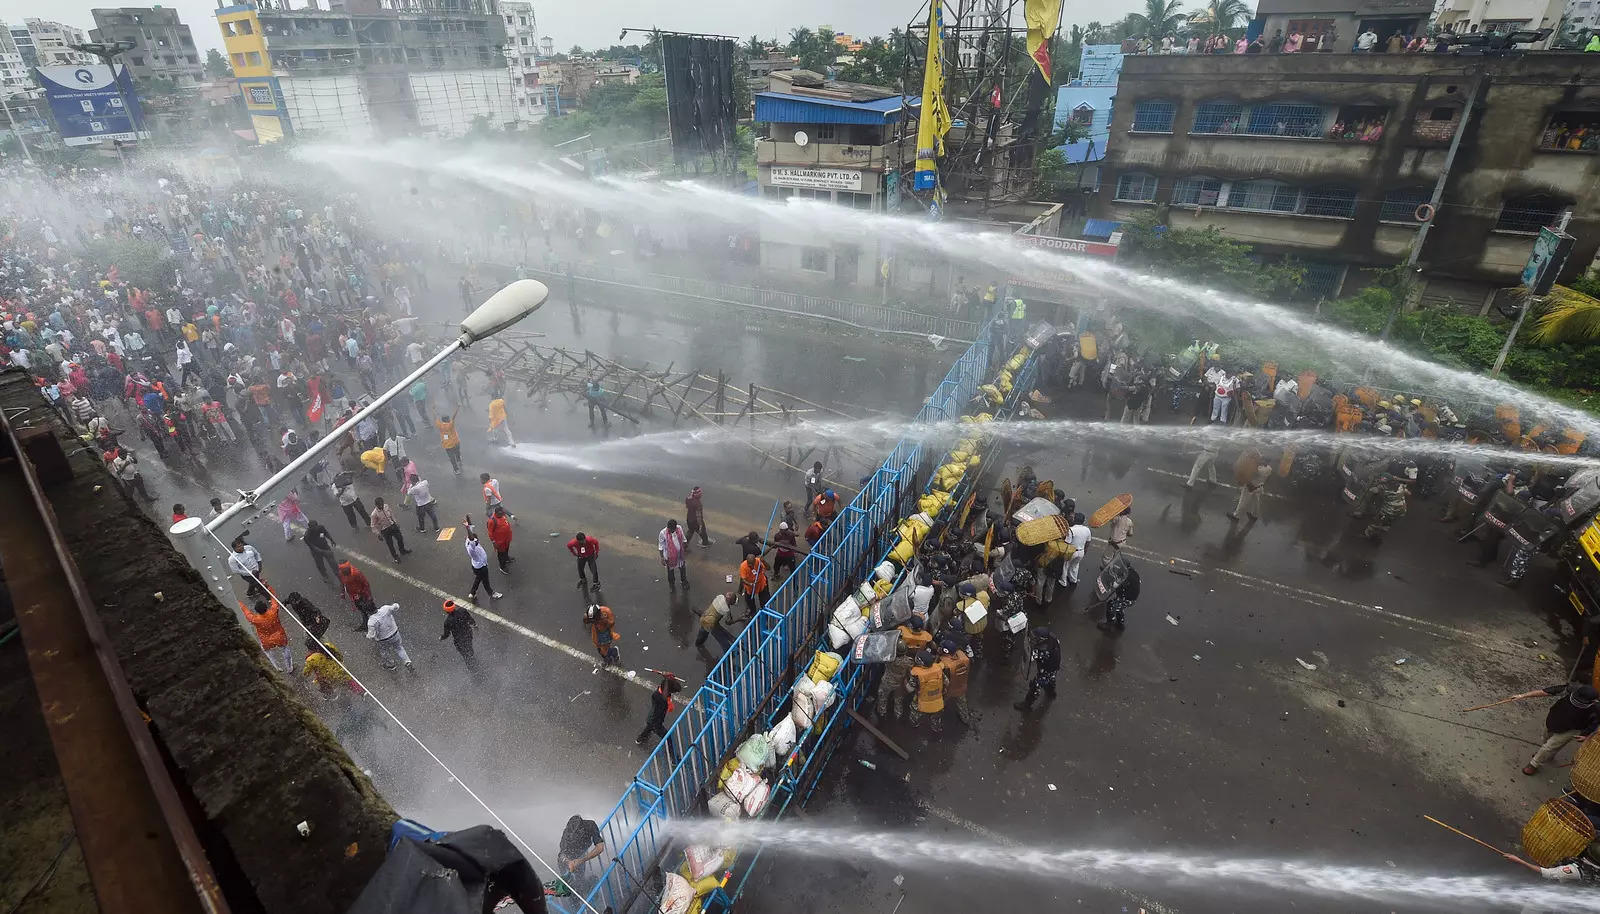 BJP protest in Kolkata turns violent; see pics